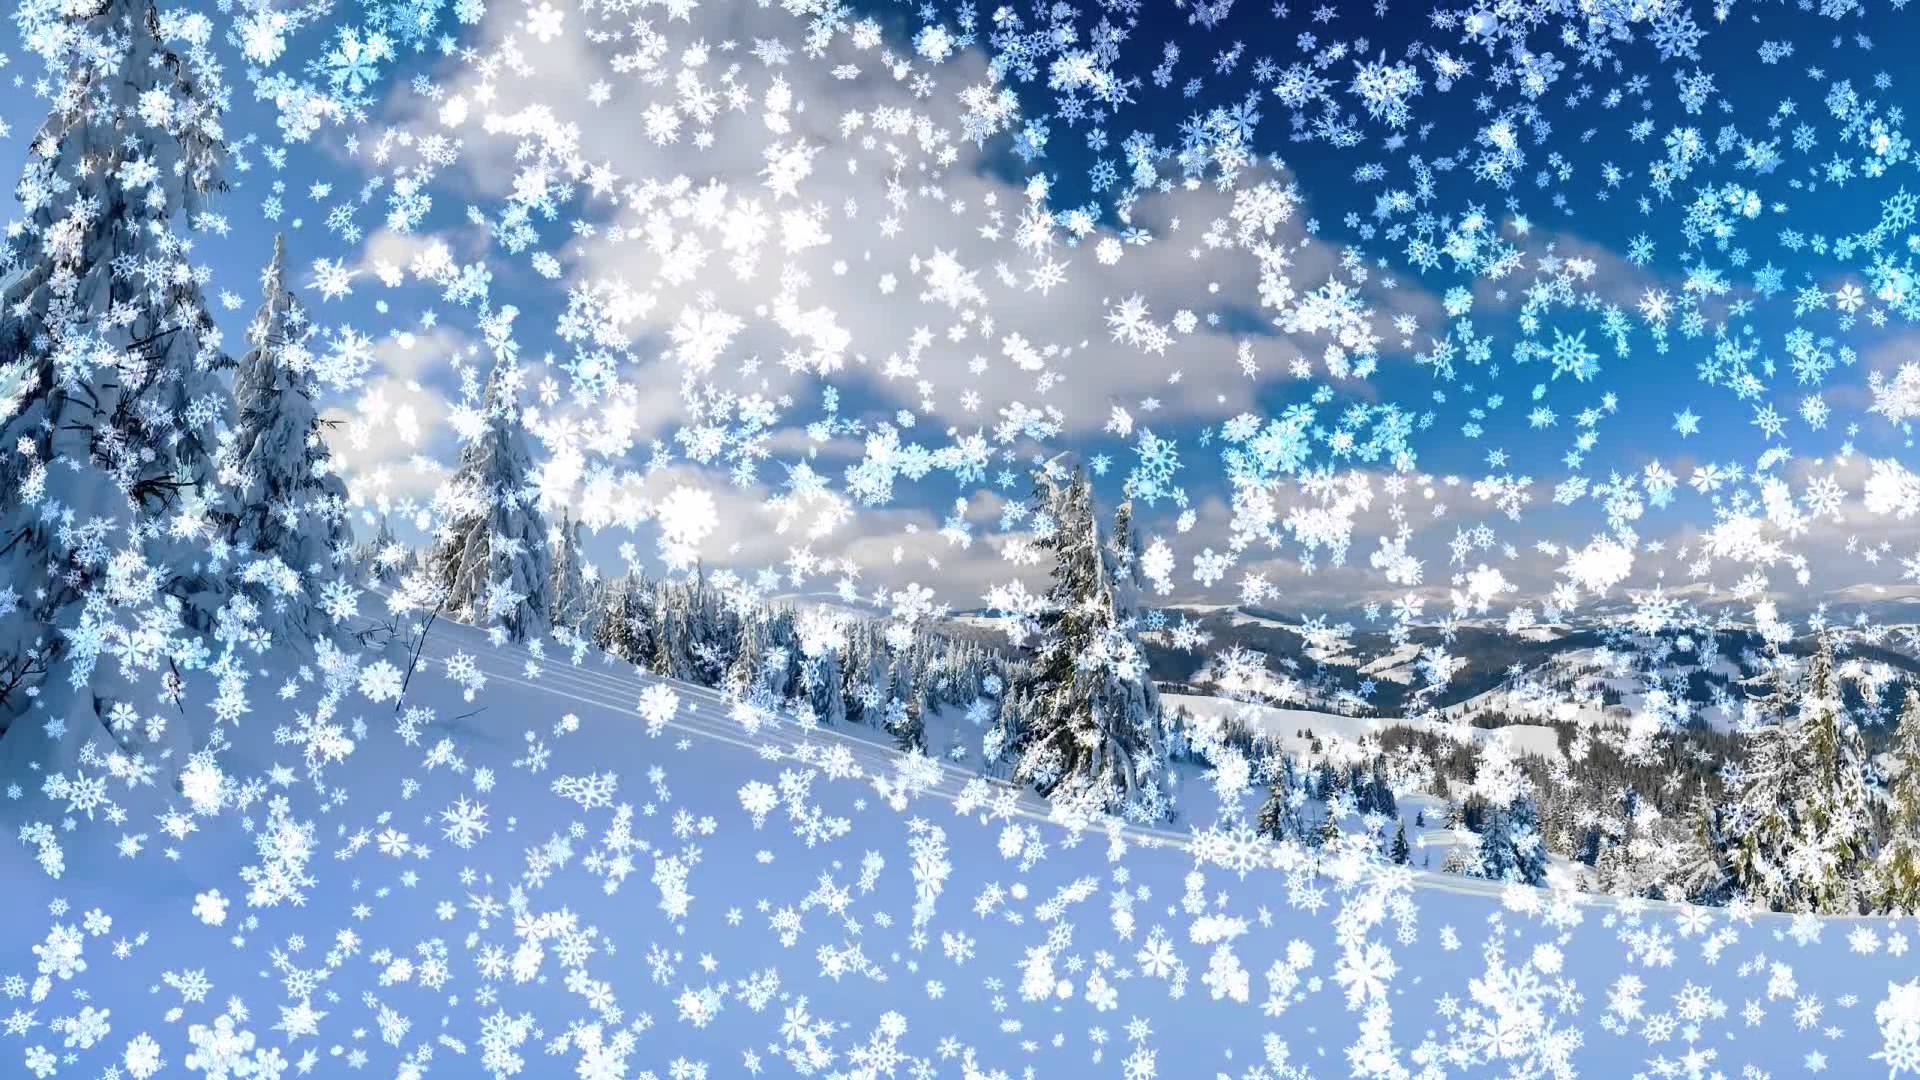 Snowy Desktop 3D - Live Wallpaper and Screensaver - YouTube